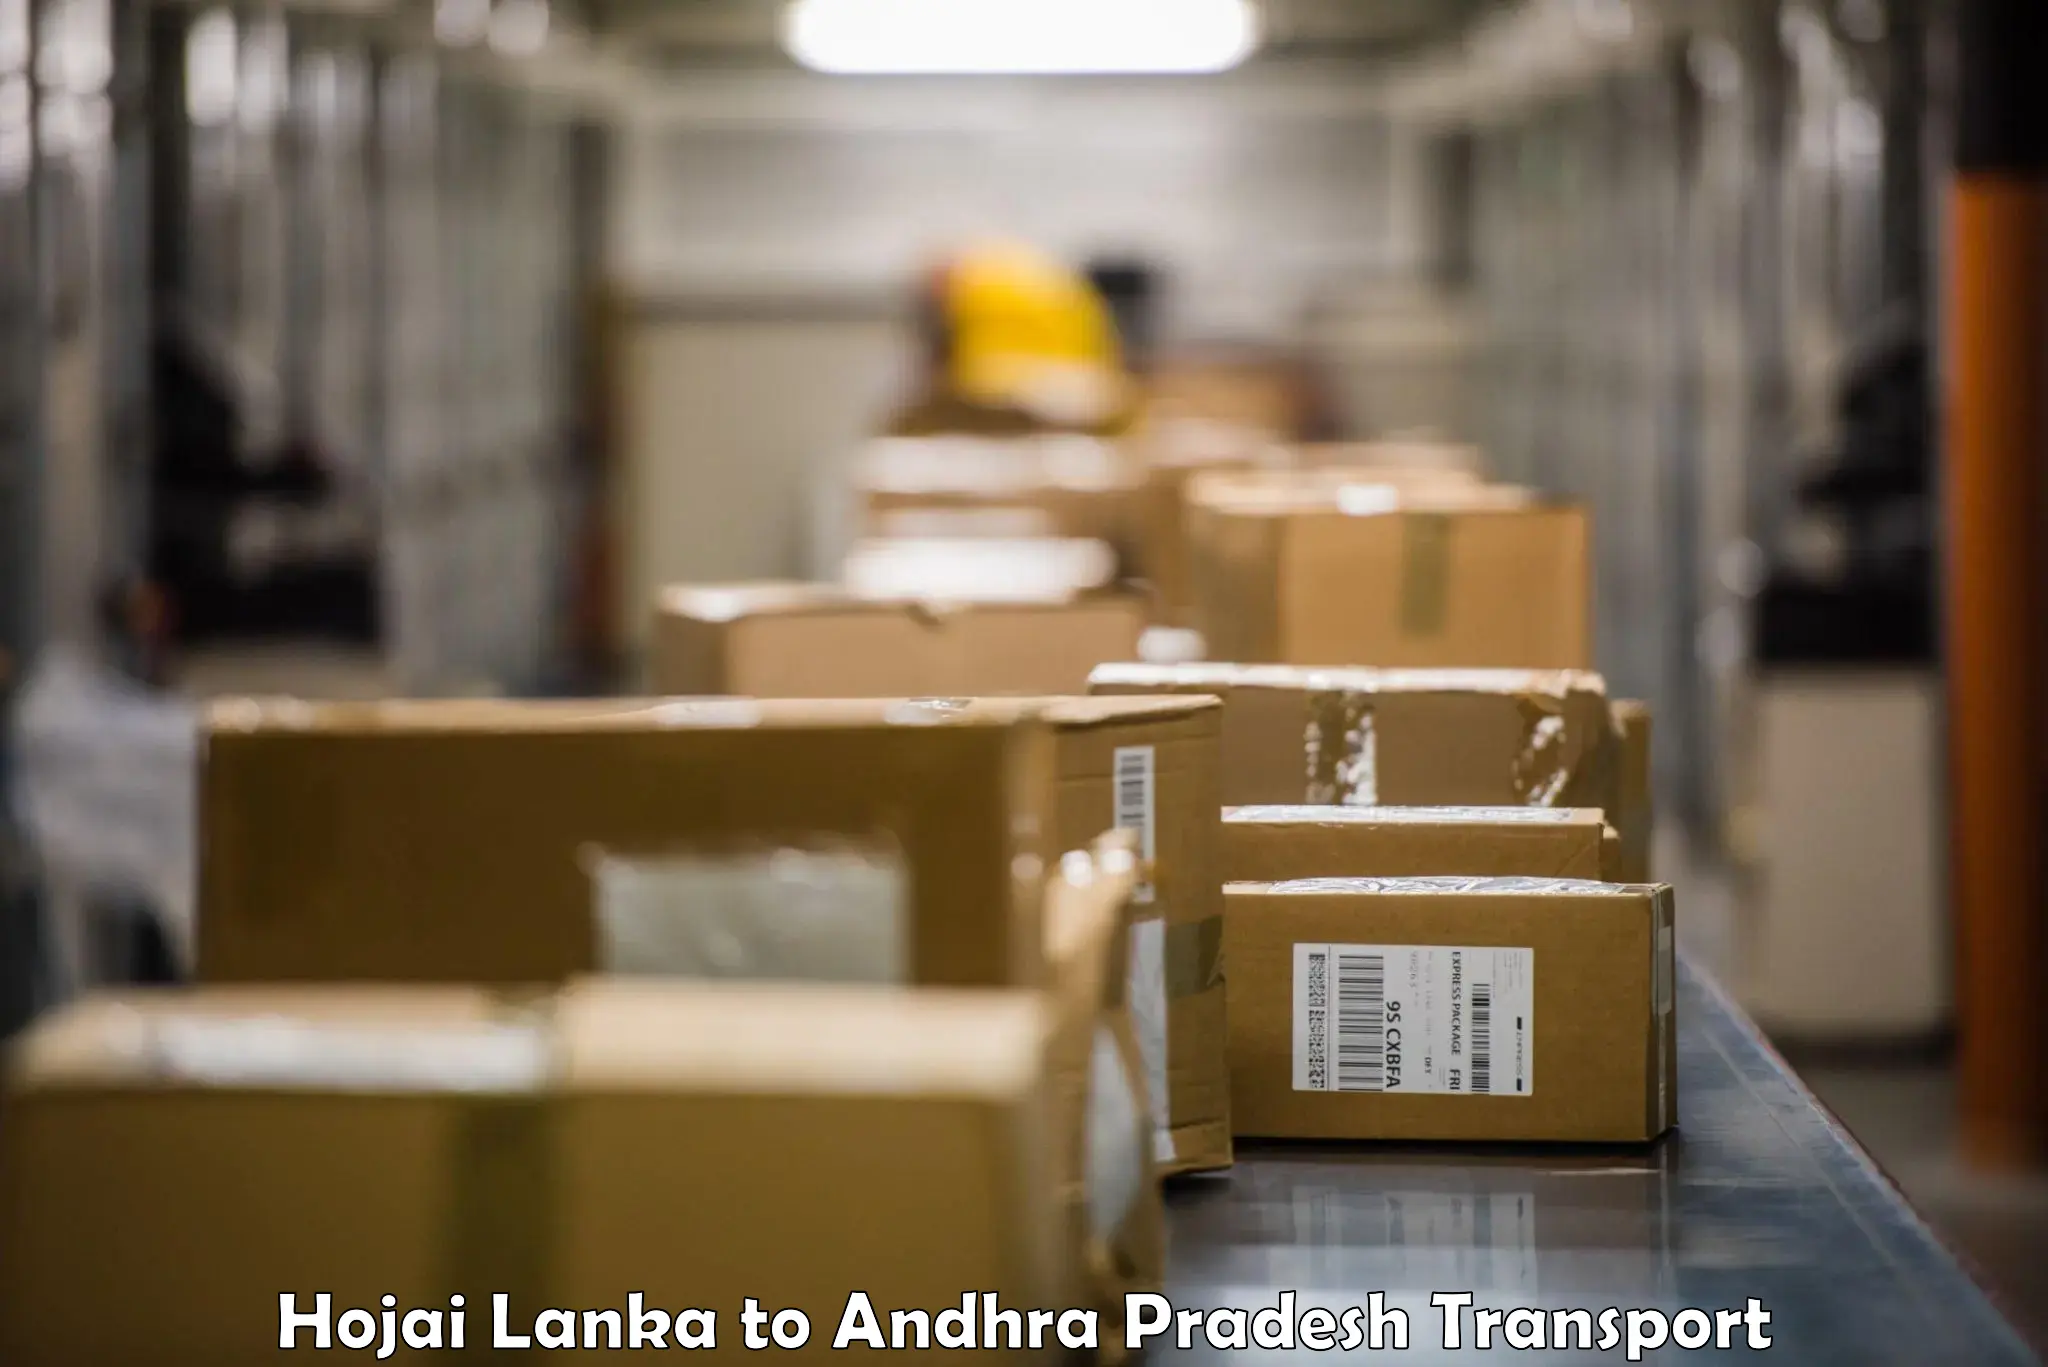 Cargo train transport services Hojai Lanka to Chintapalli